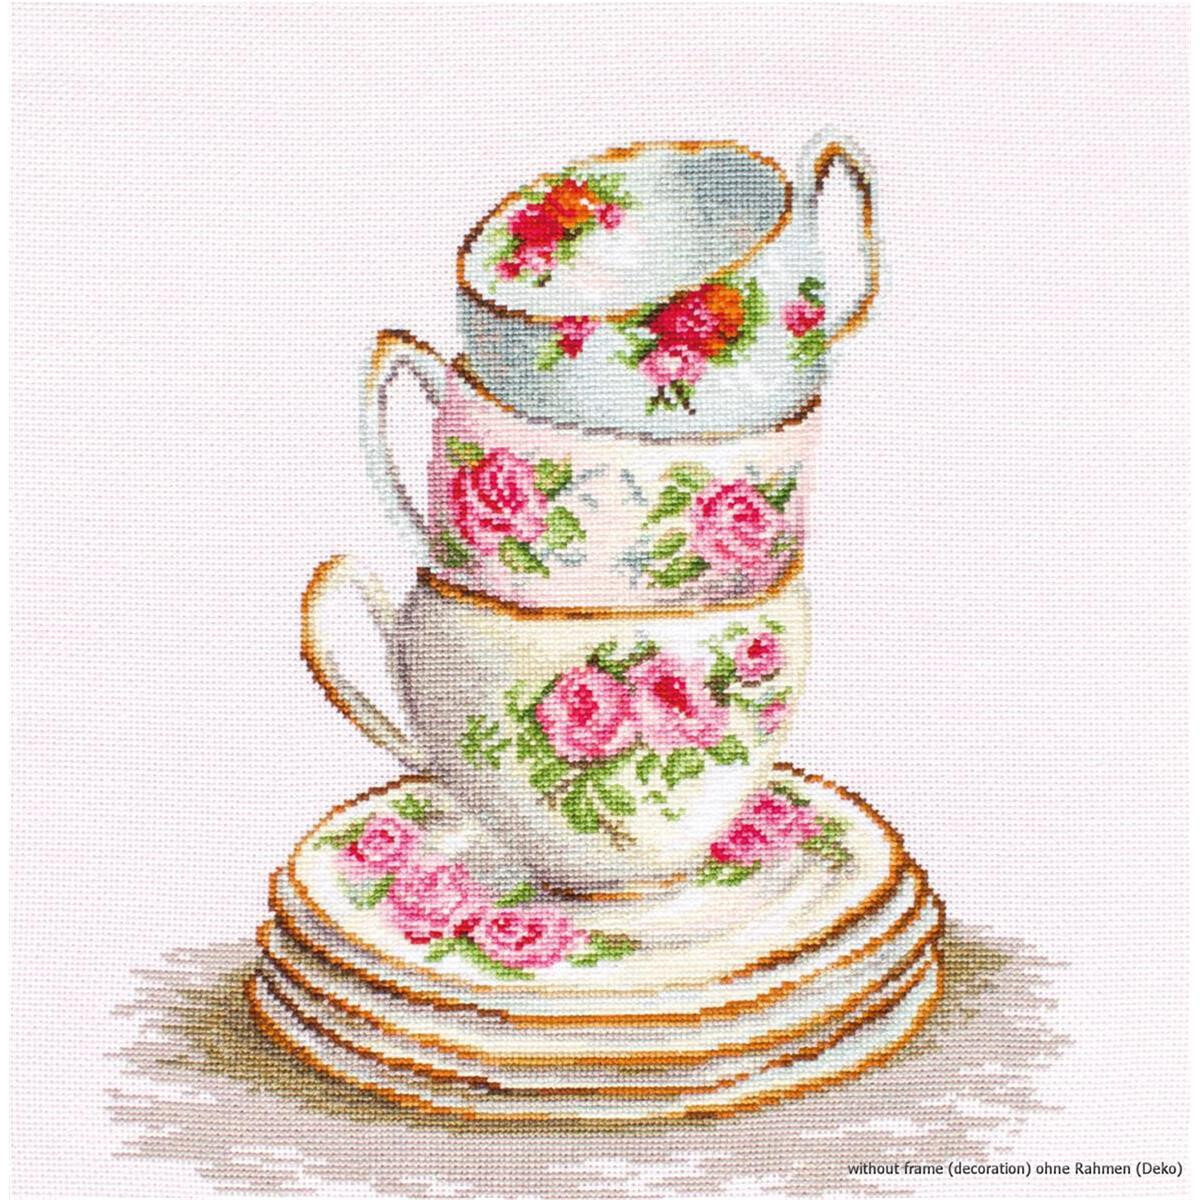 Unillustrazione mostra una pila di tre tazze da tè...